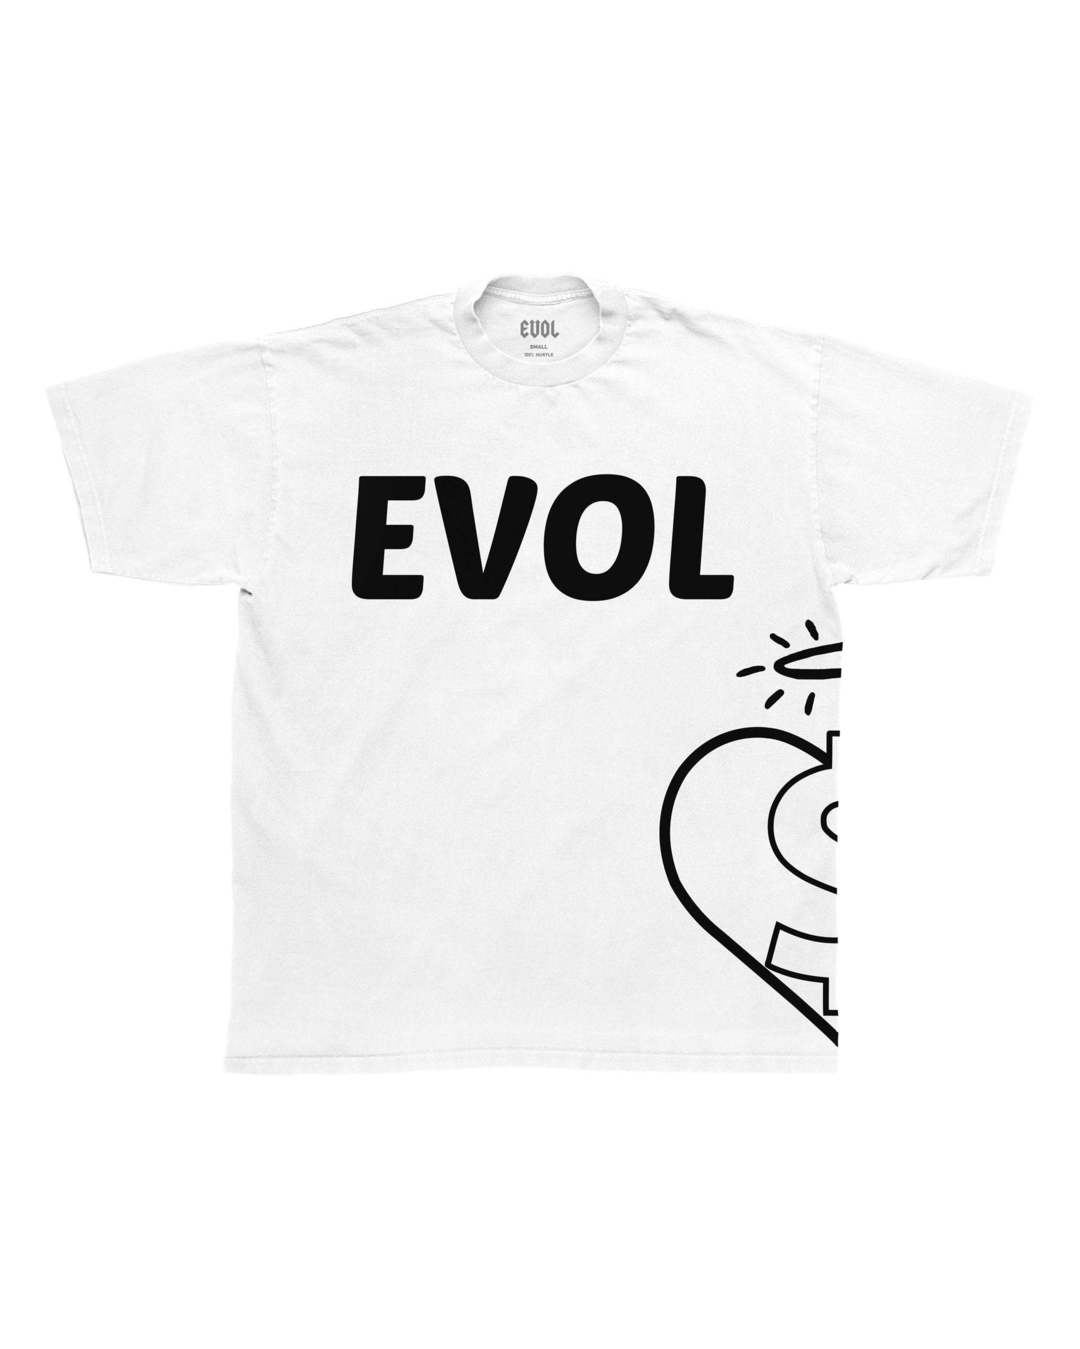 EVOL Side Logo Shirt White And Black